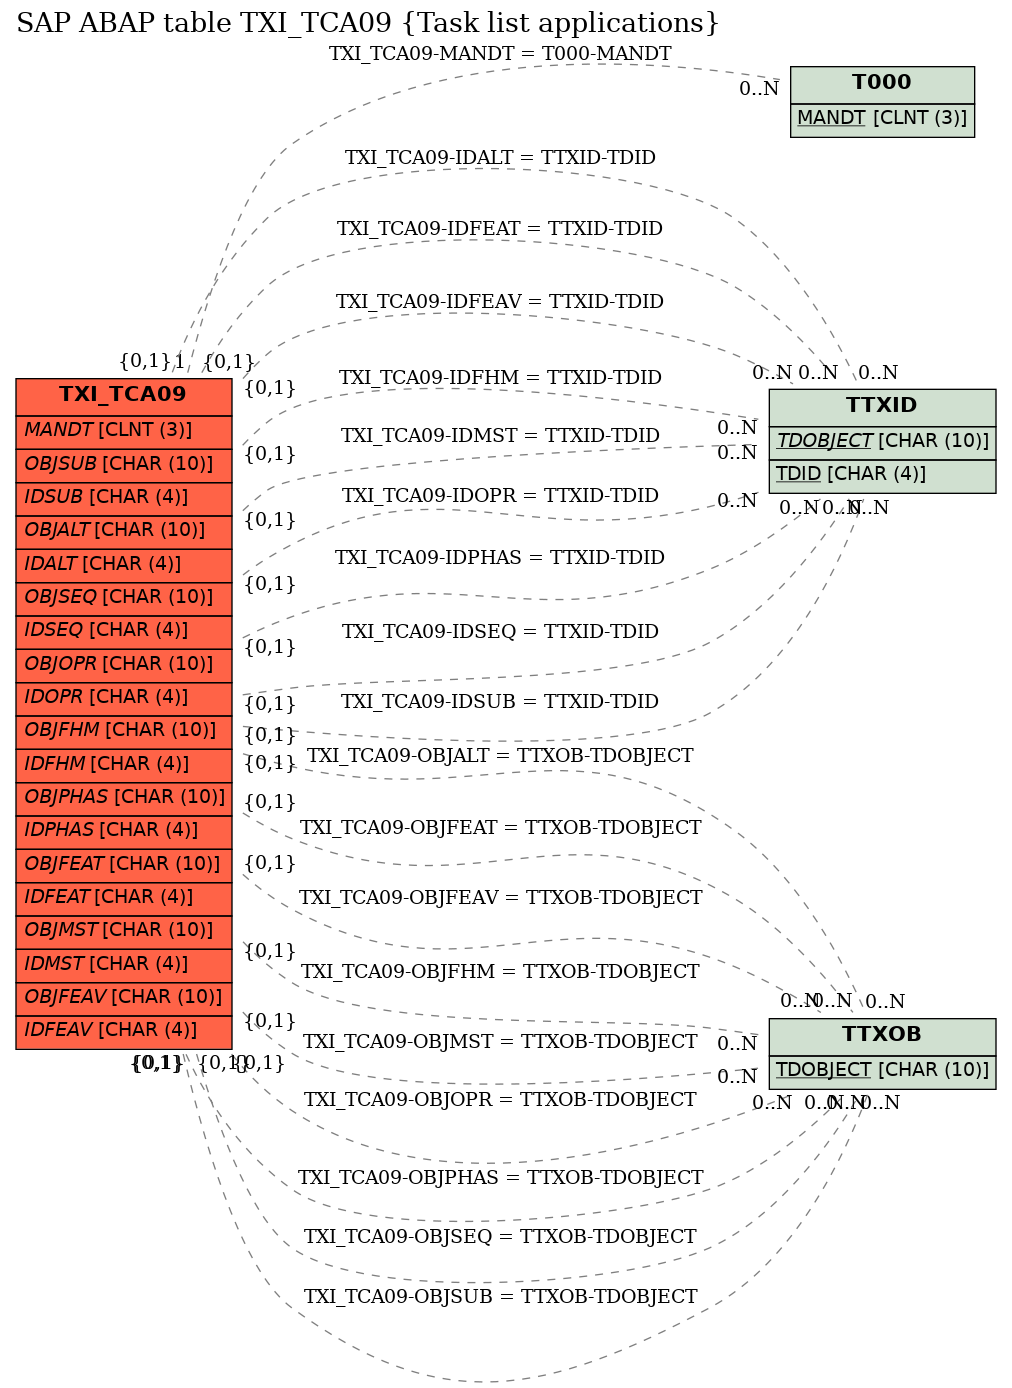 E-R Diagram for table TXI_TCA09 (Task list applications)